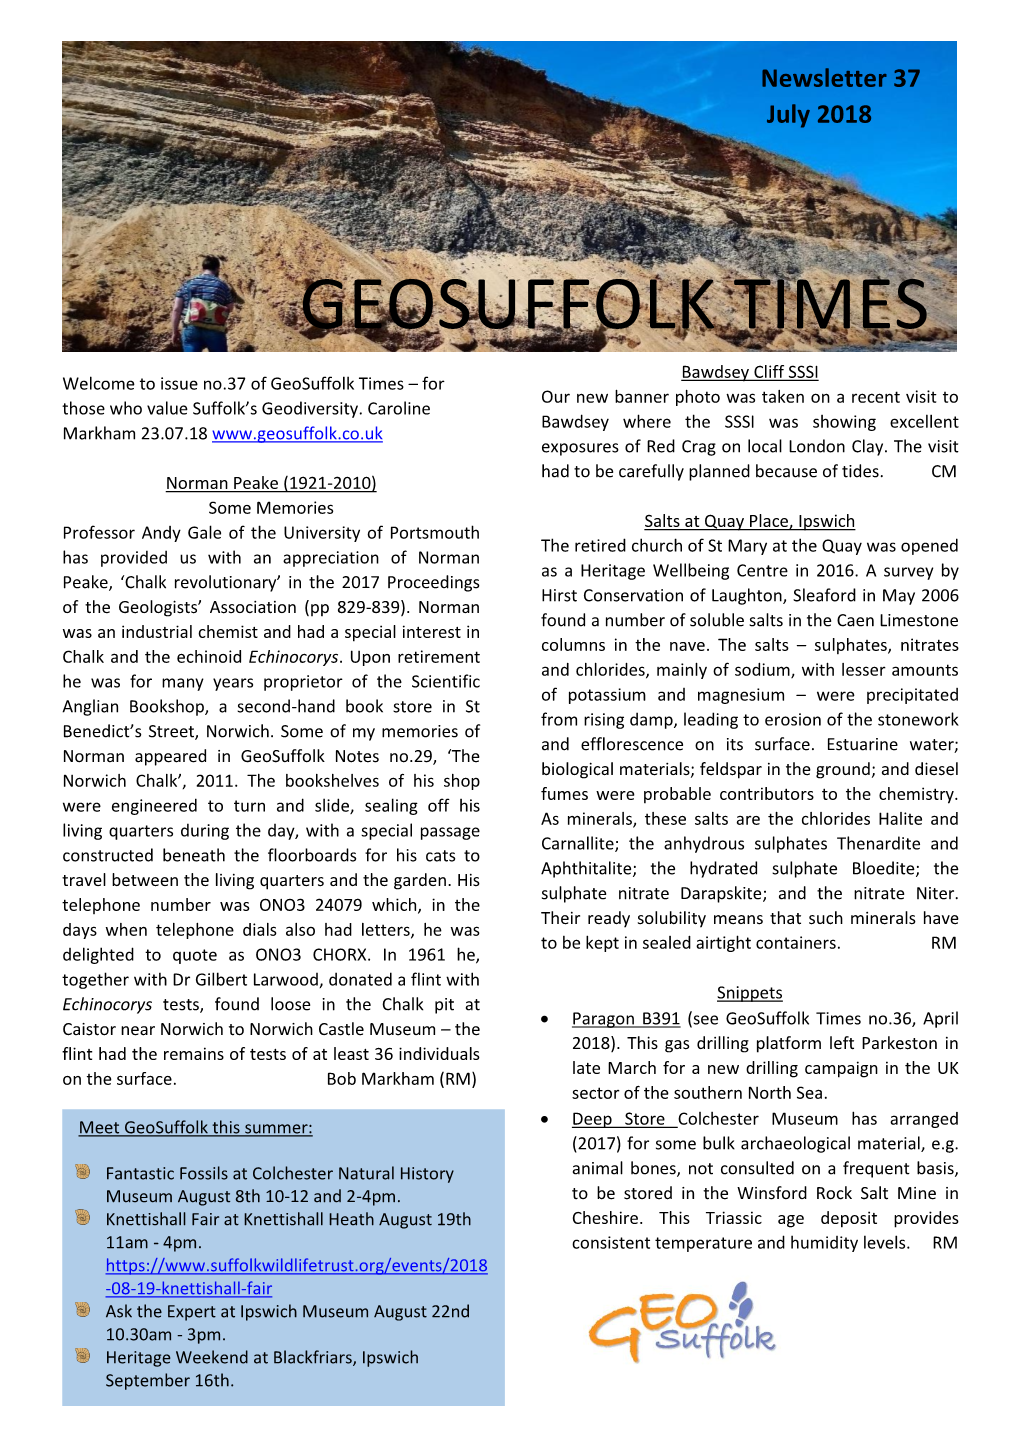 Geosuffolk Times No. 37